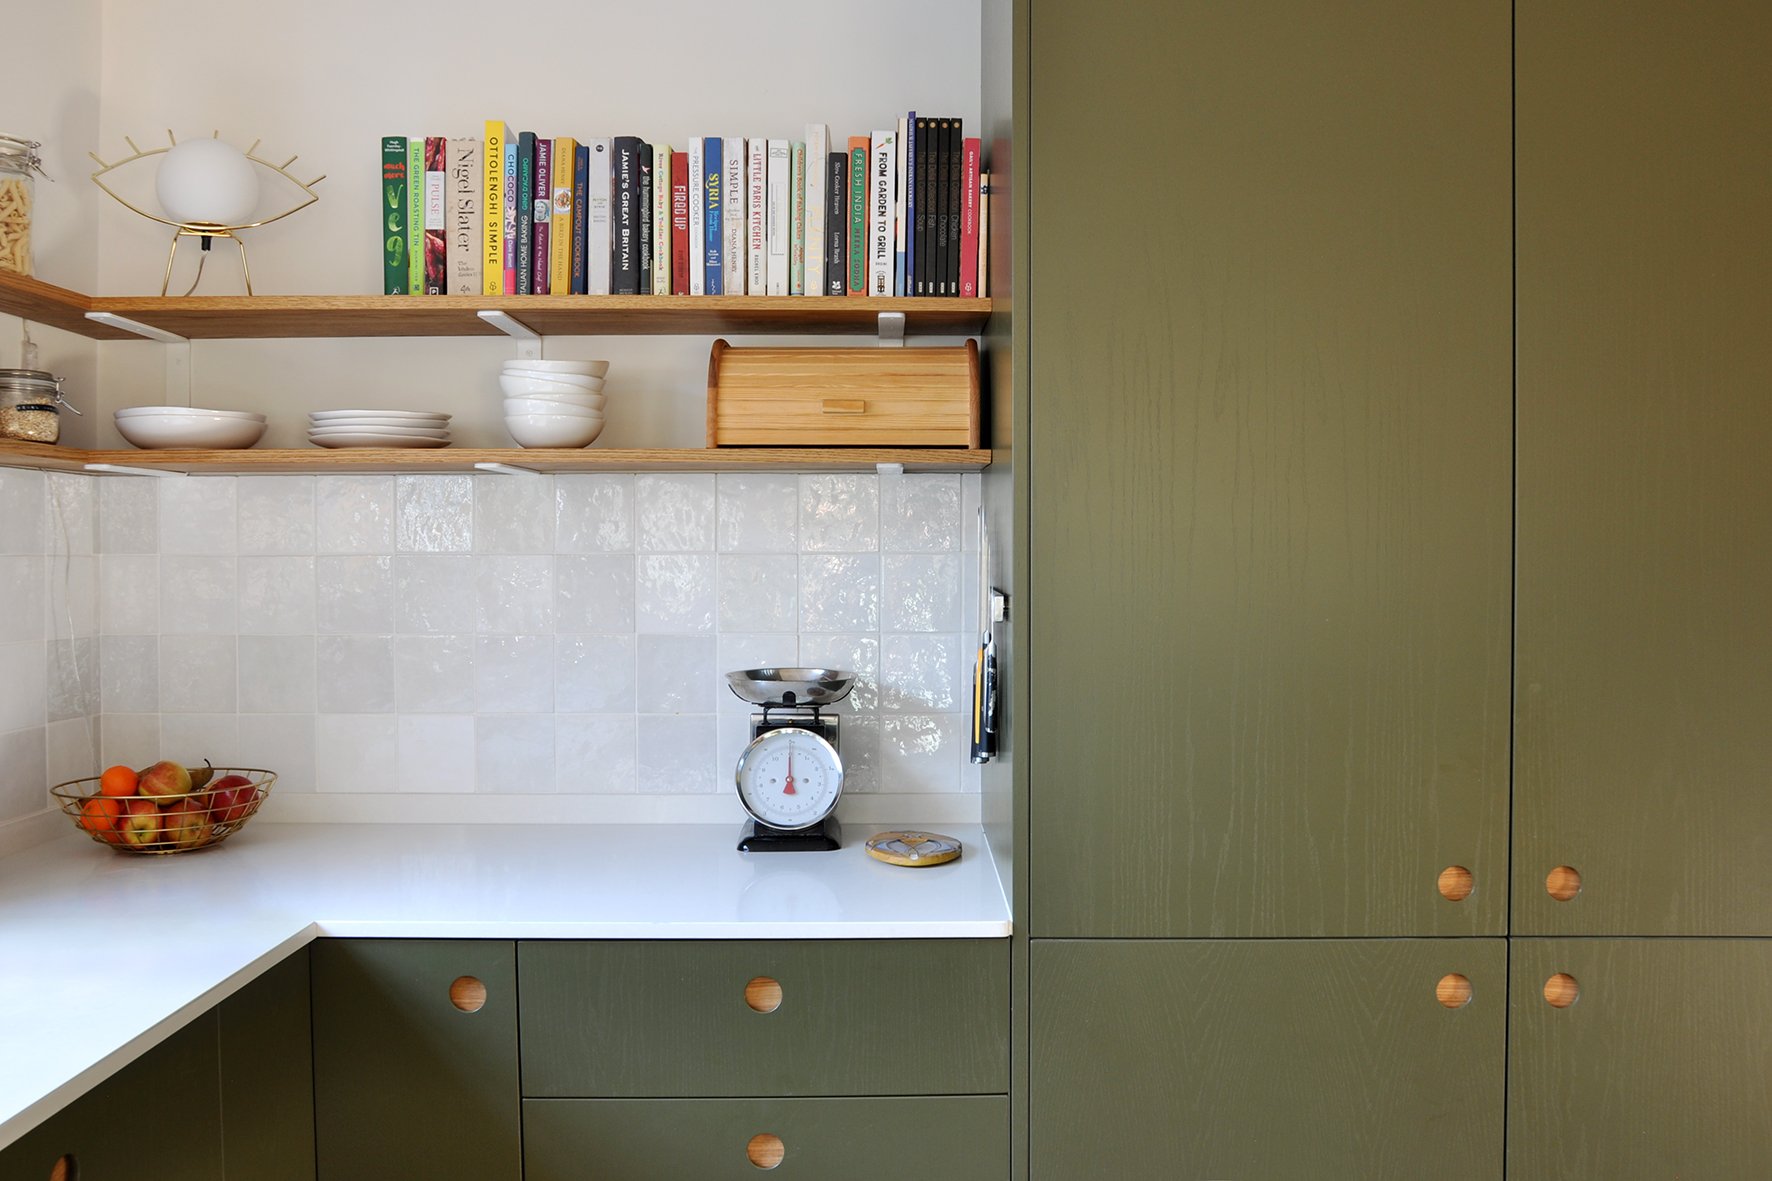 CharlotteBucciero-Interiors-green-kitchen-doors-shelving-decor-open-shelves.jpg